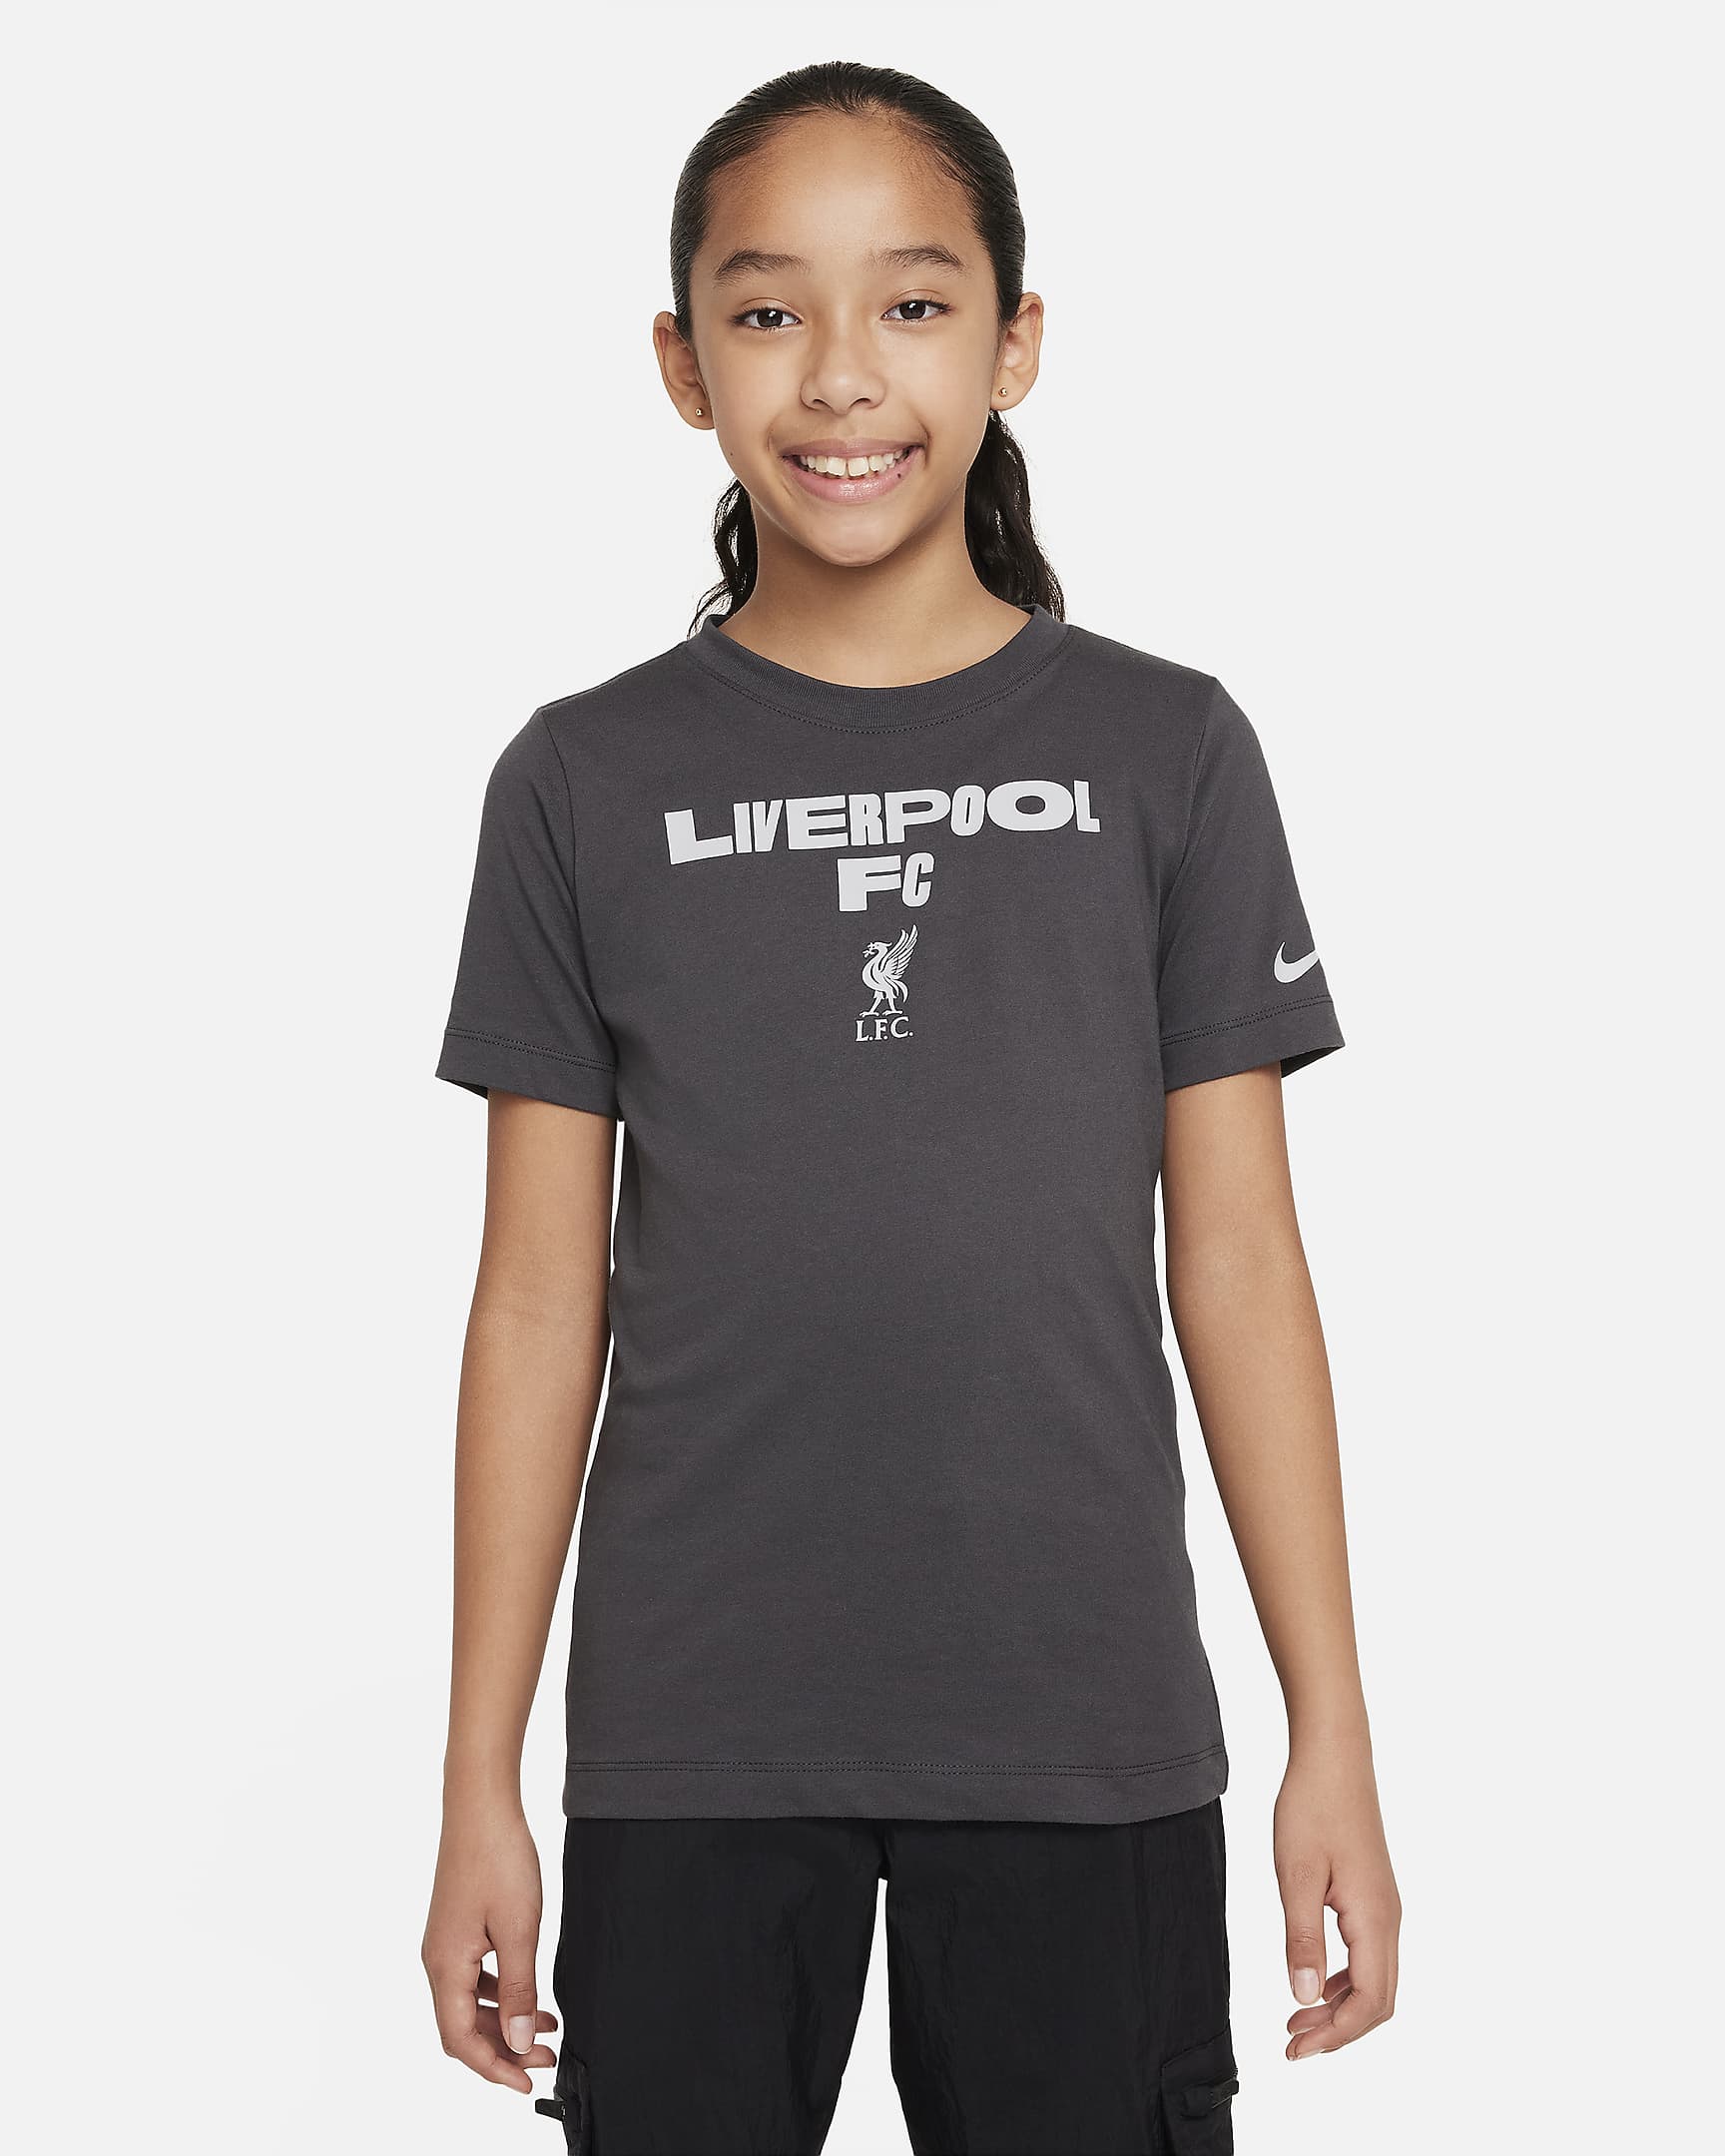 Liverpool F.C. Older Kids' Nike Football T-Shirt. Nike NL